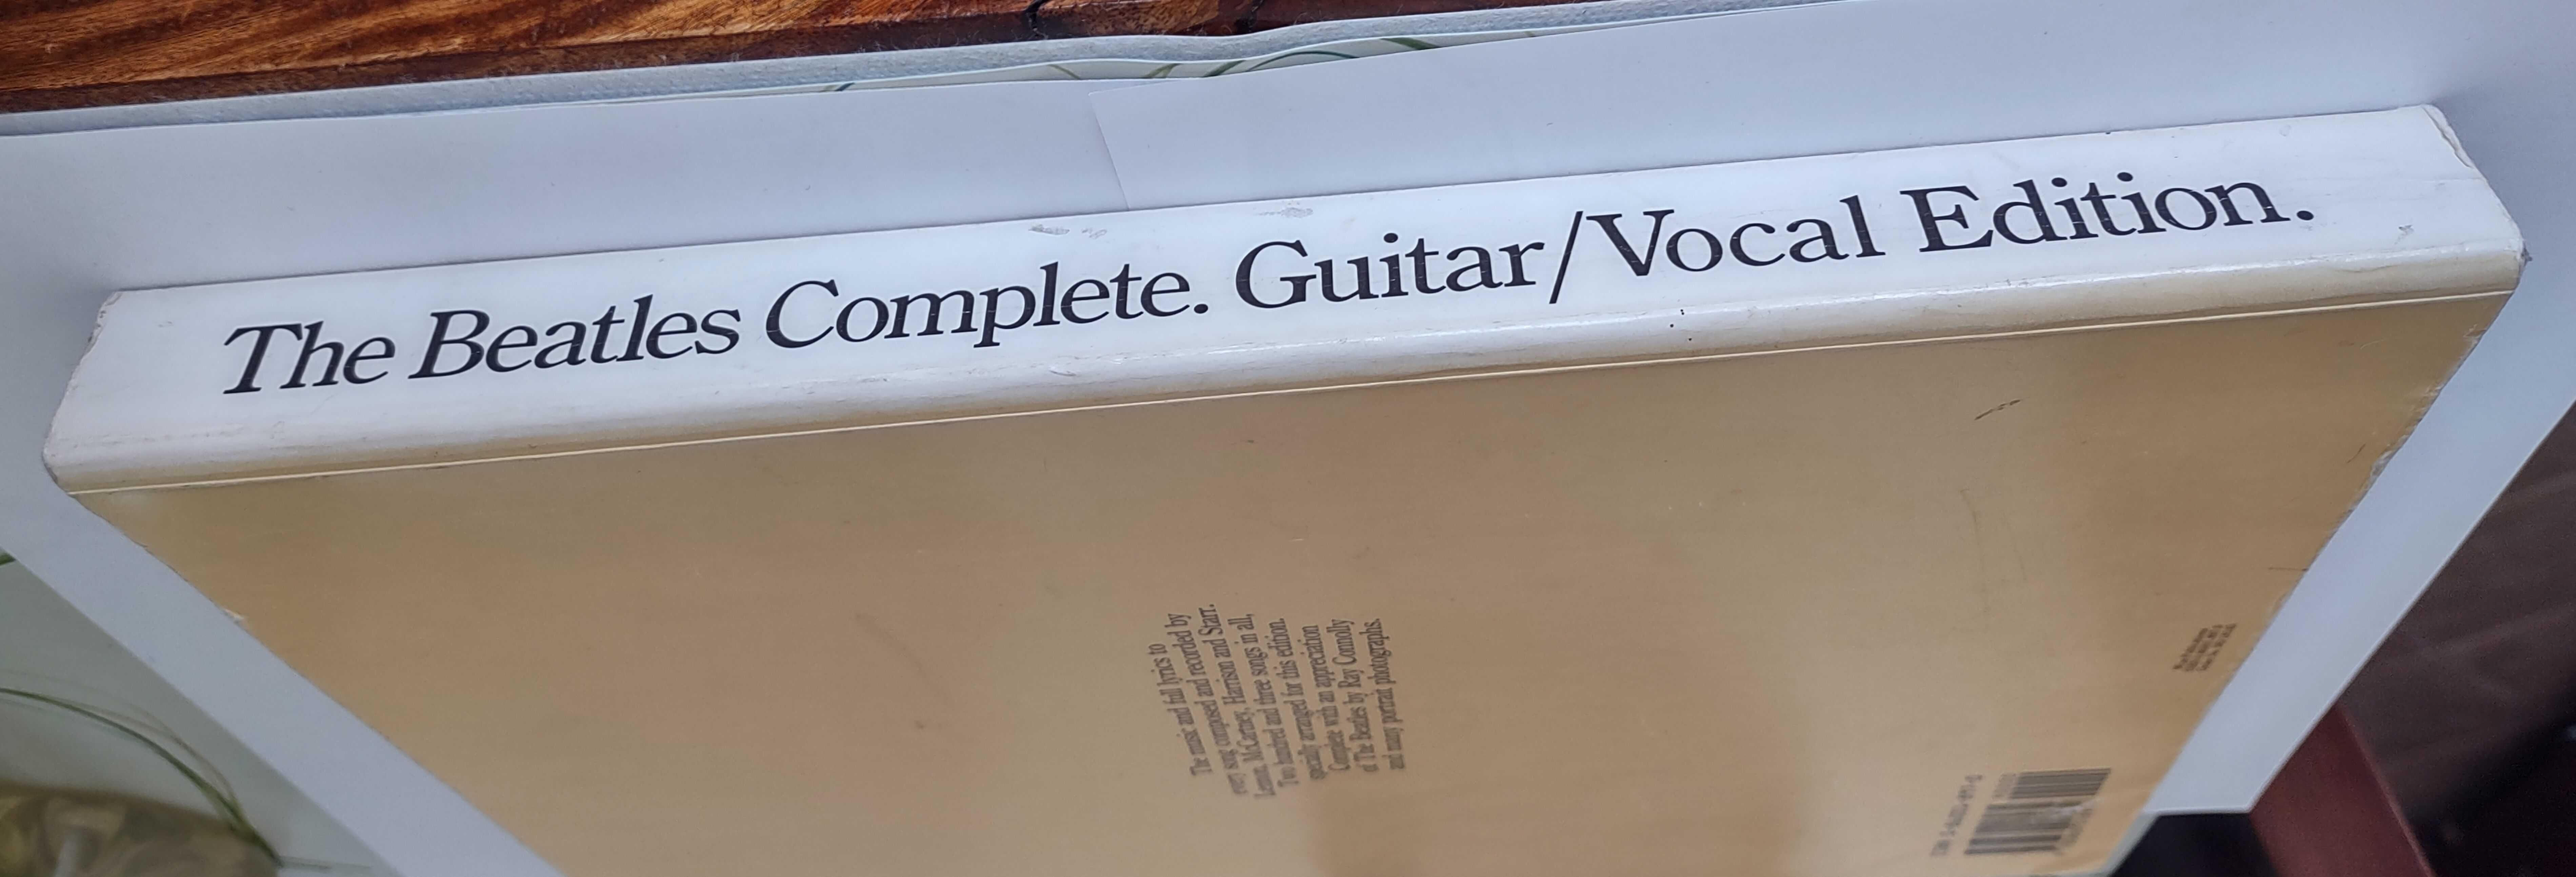 The Beatles Complete. Guitar/Vocal Edition. Nuty i teksty do roku 1970